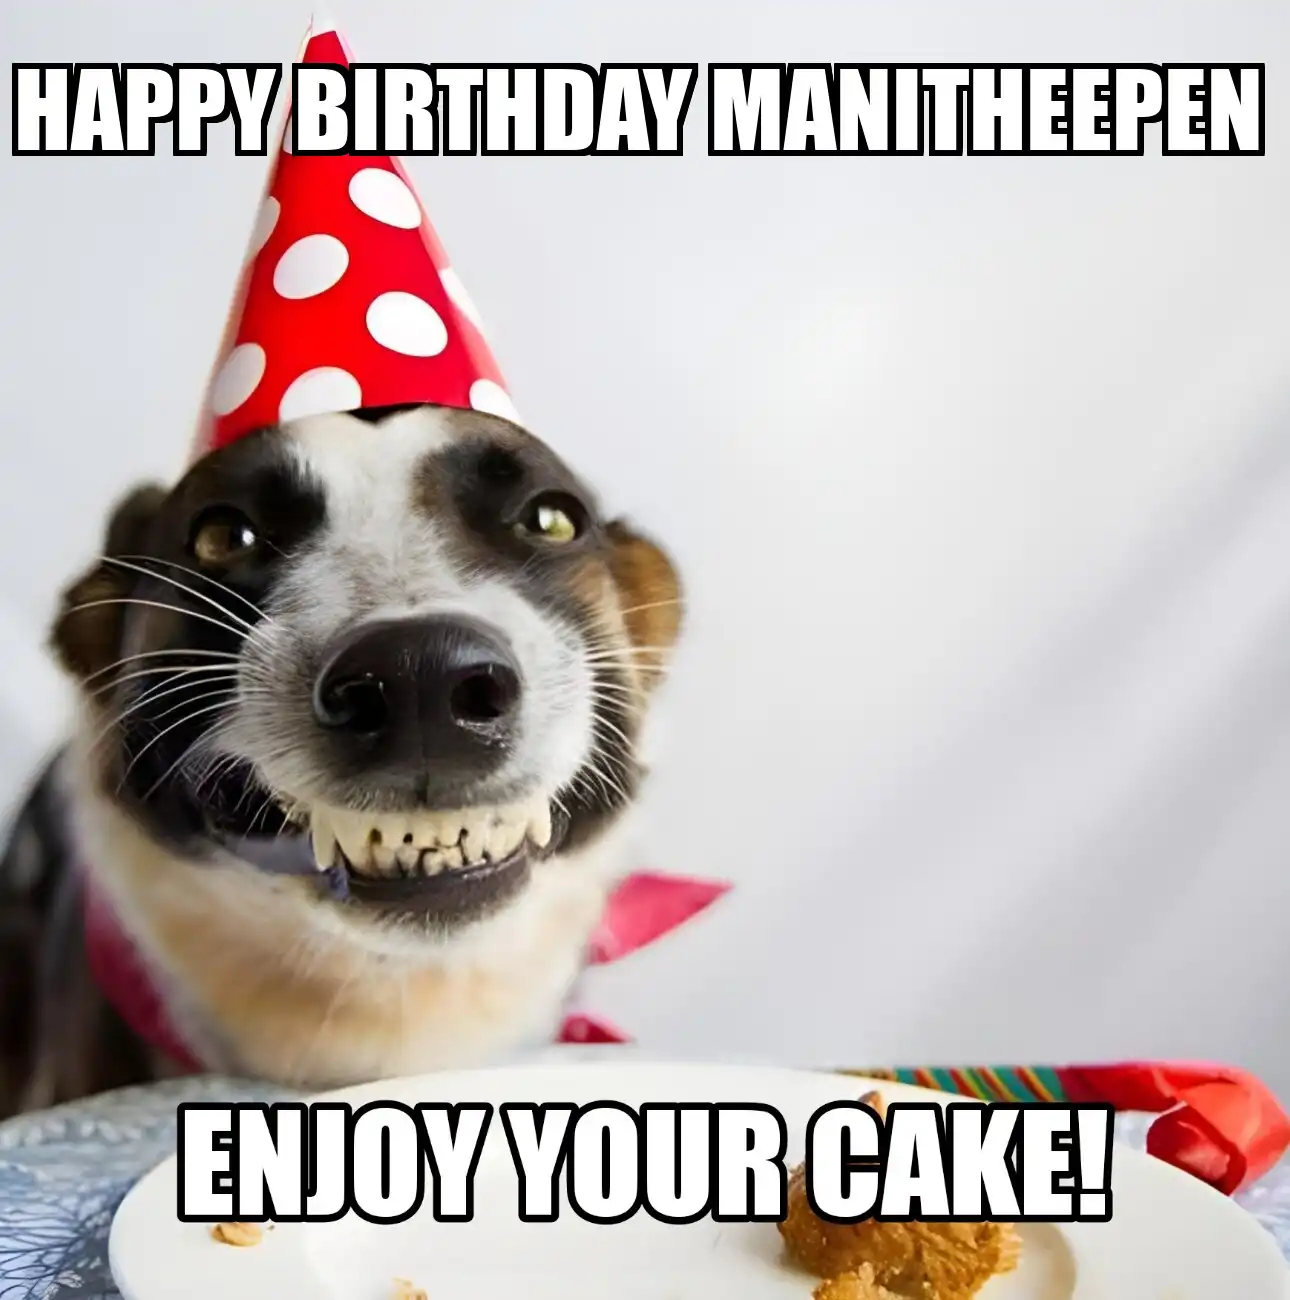 Happy Birthday Manitheepen Enjoy Your Cake Dog Meme